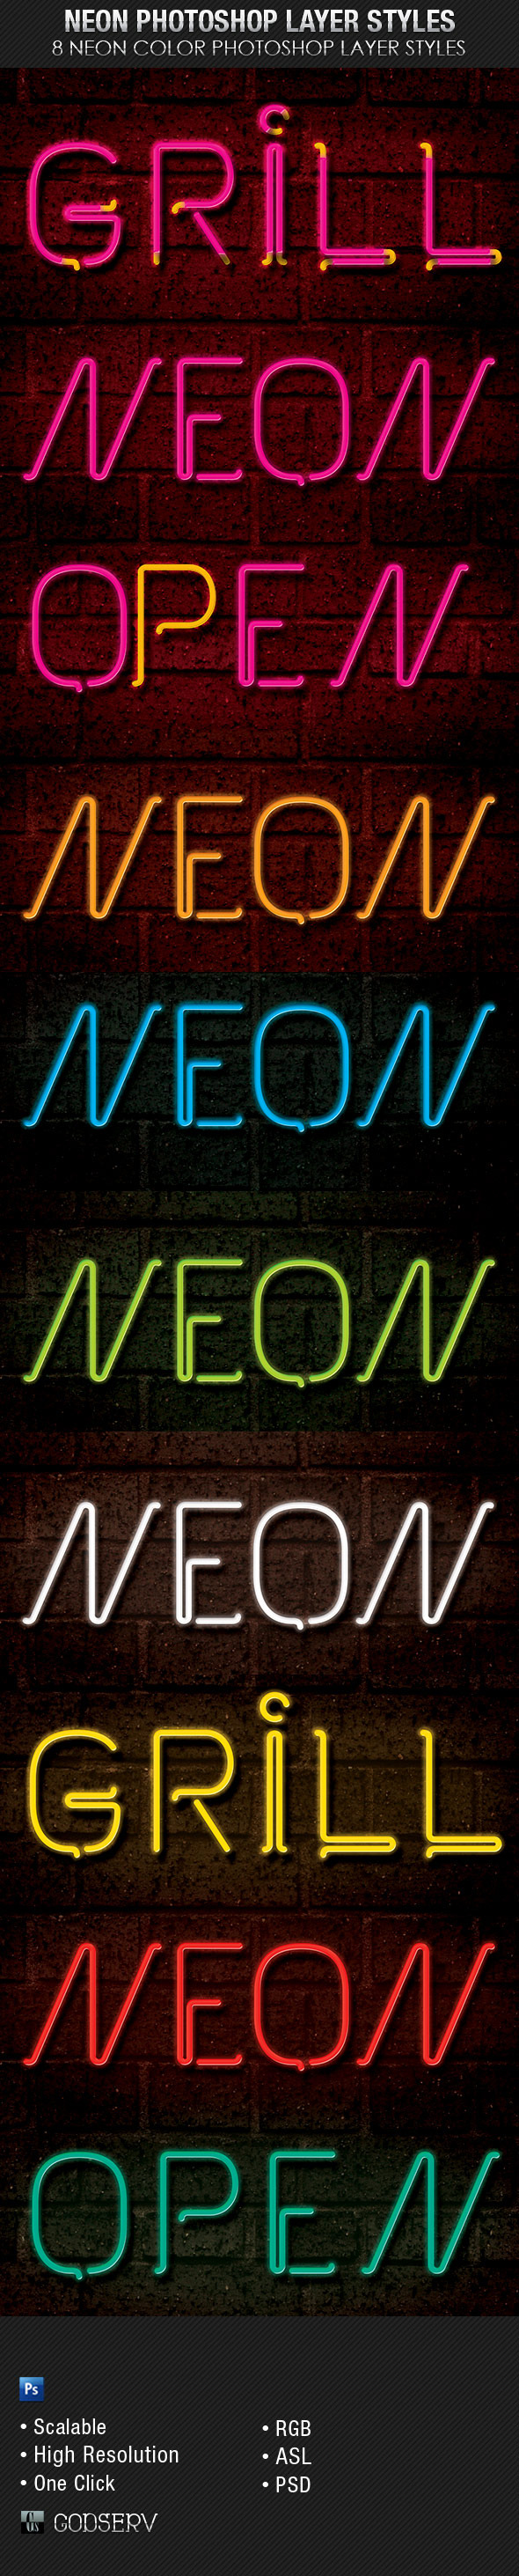 neon text style photoshop free